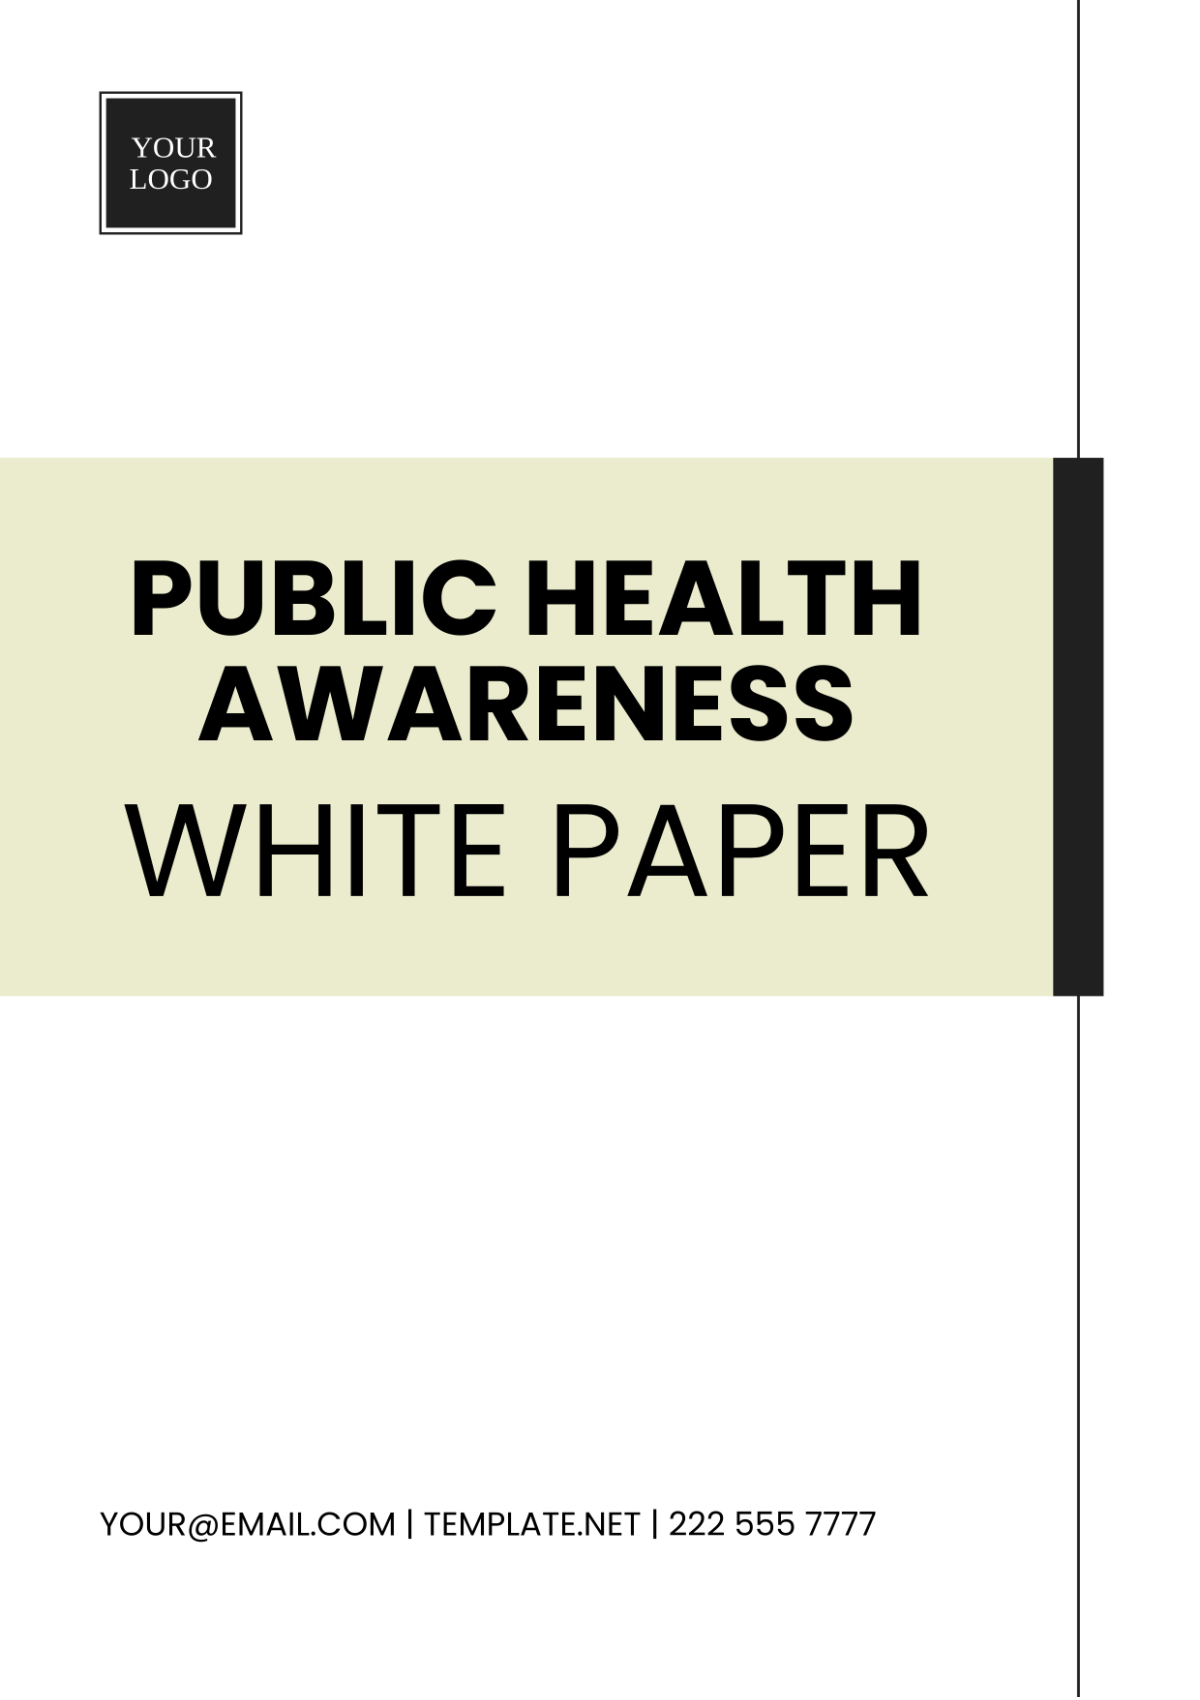 Public Health Awareness White Paper Template